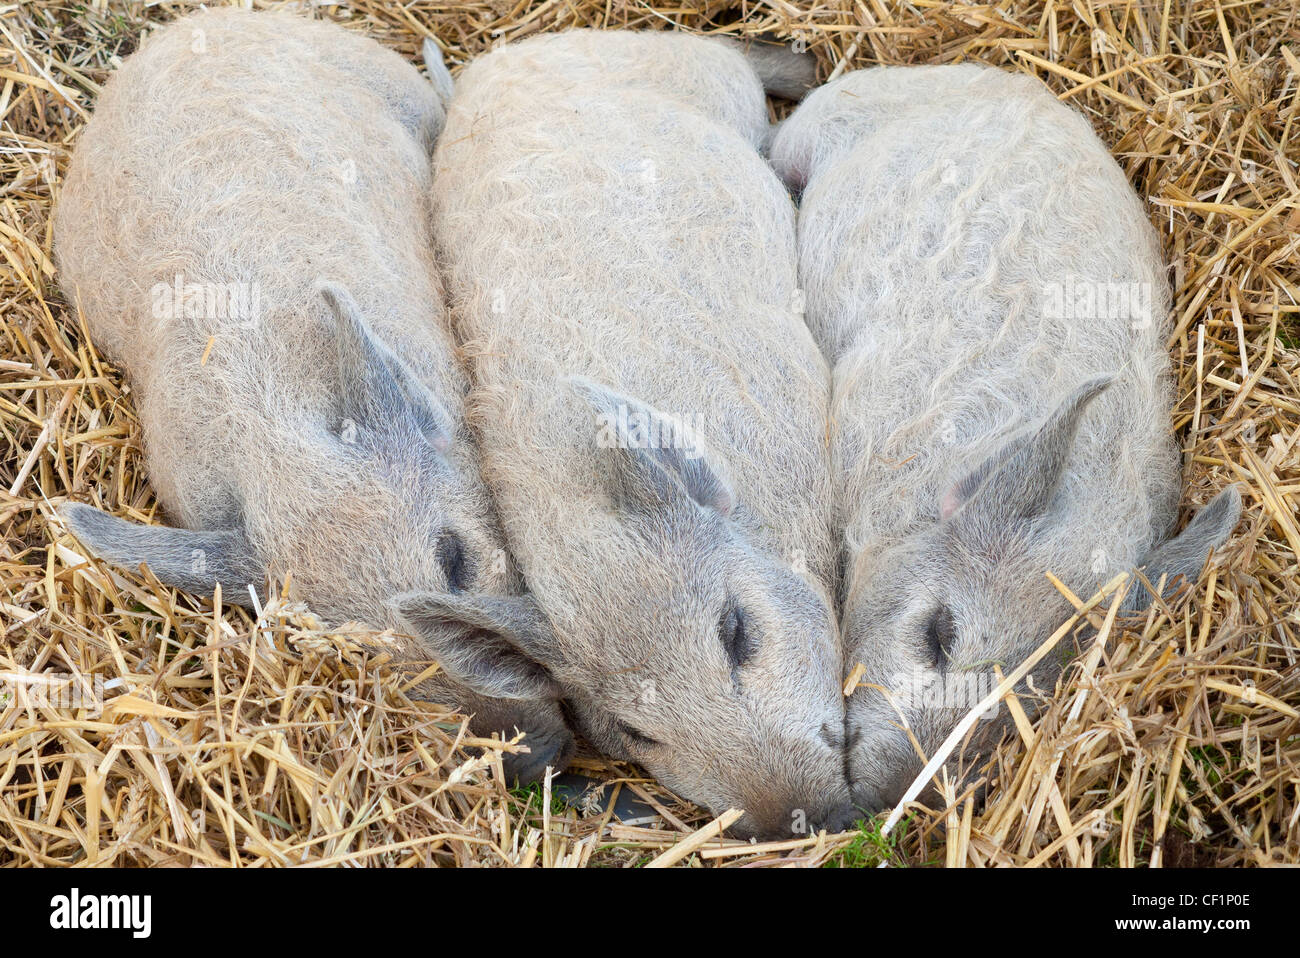 Three pedigree Mangalitza piglets asleep on a bed of straw. Stock Photo